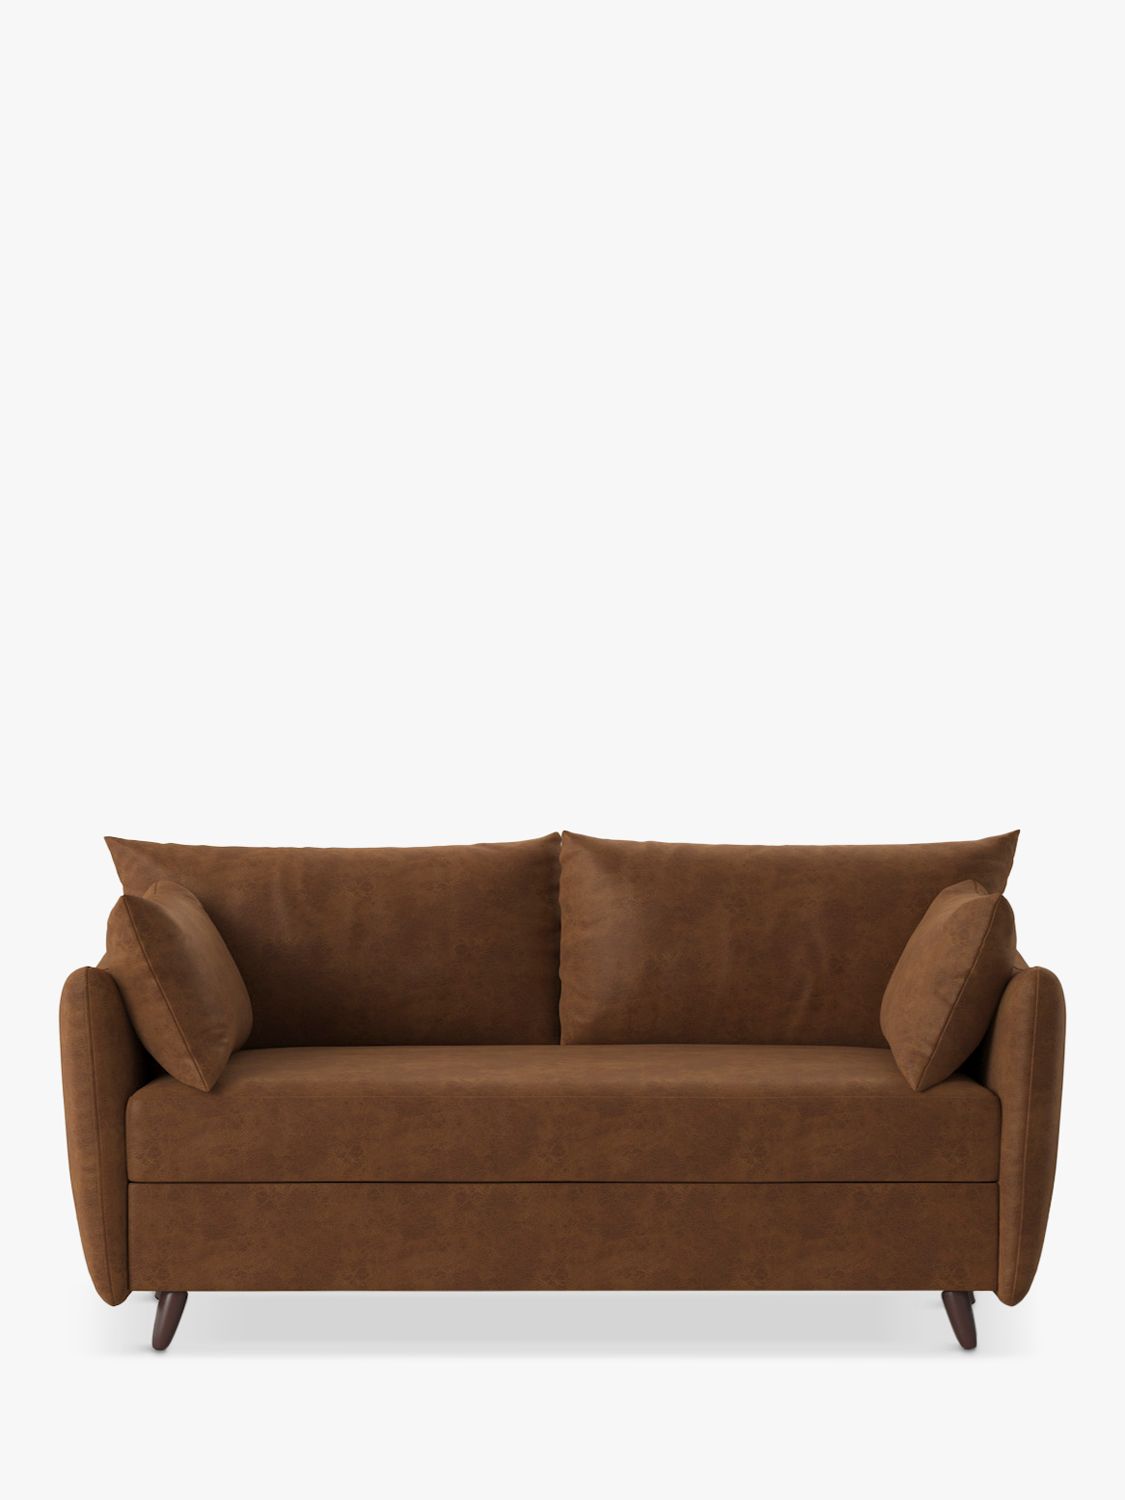 Swyft Model 08 2.5 Seater Sofa Bed, Dark Leg